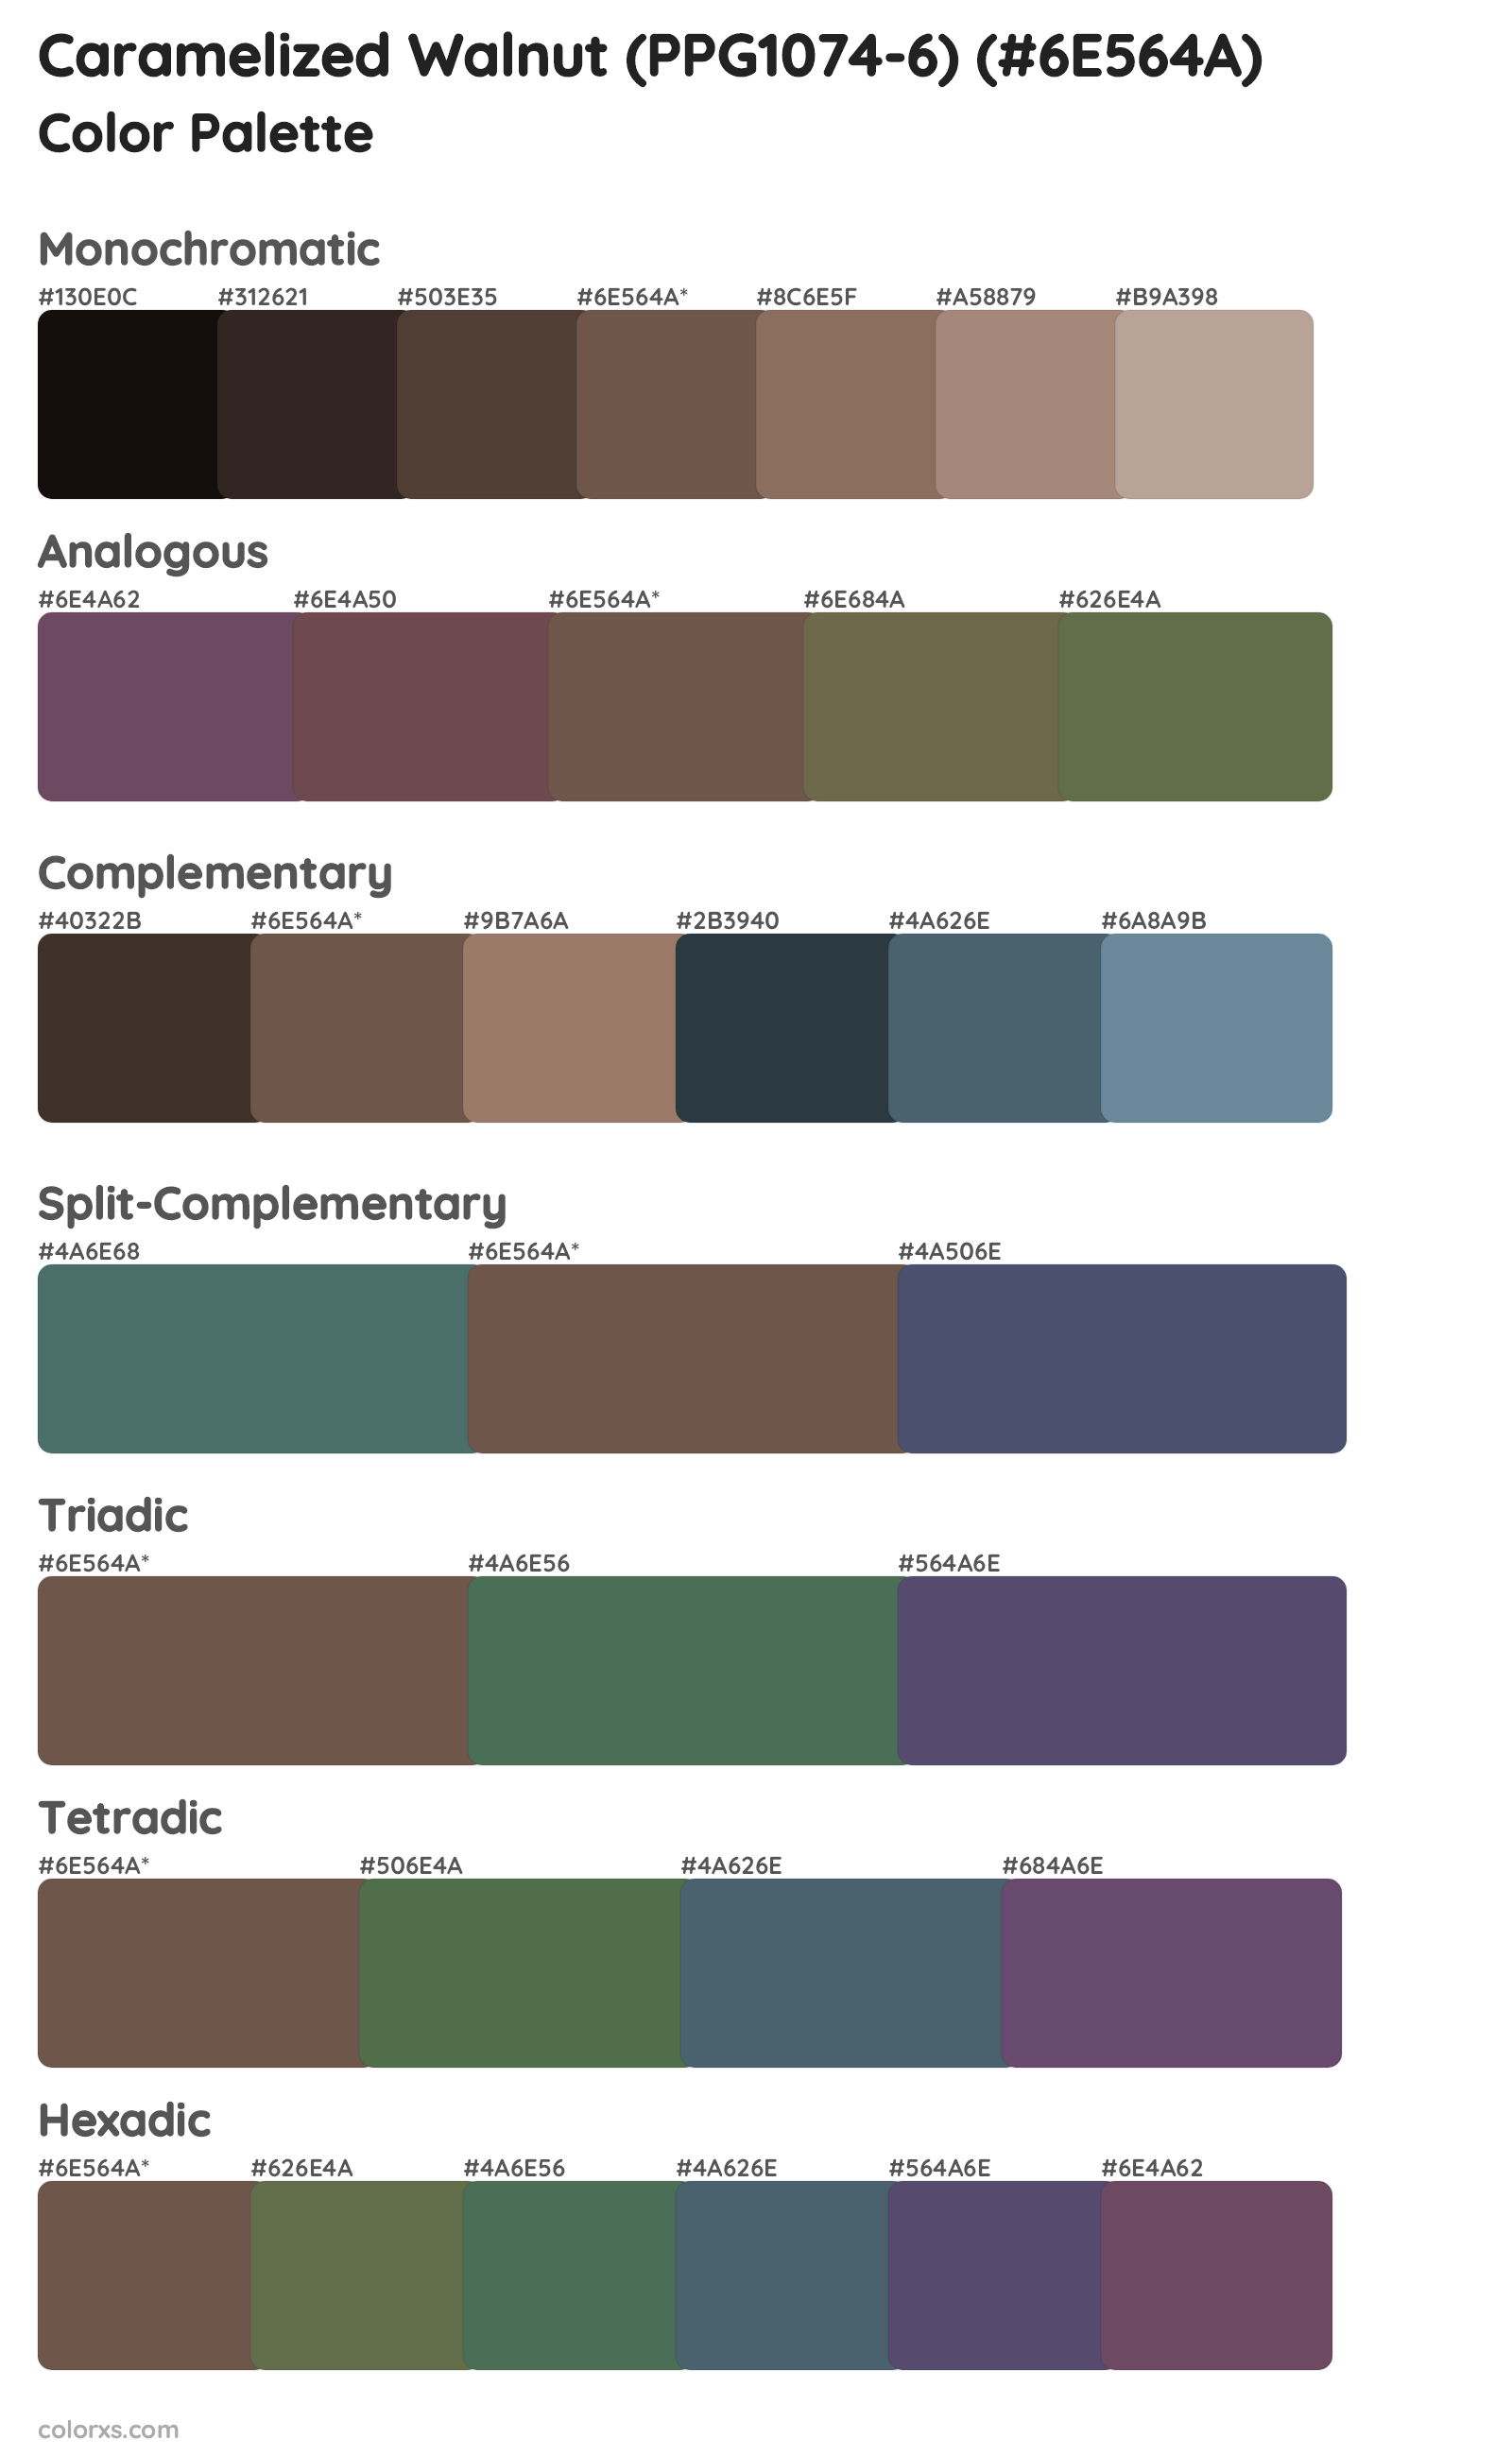 Caramelized Walnut (PPG1074-6) Color Scheme Palettes